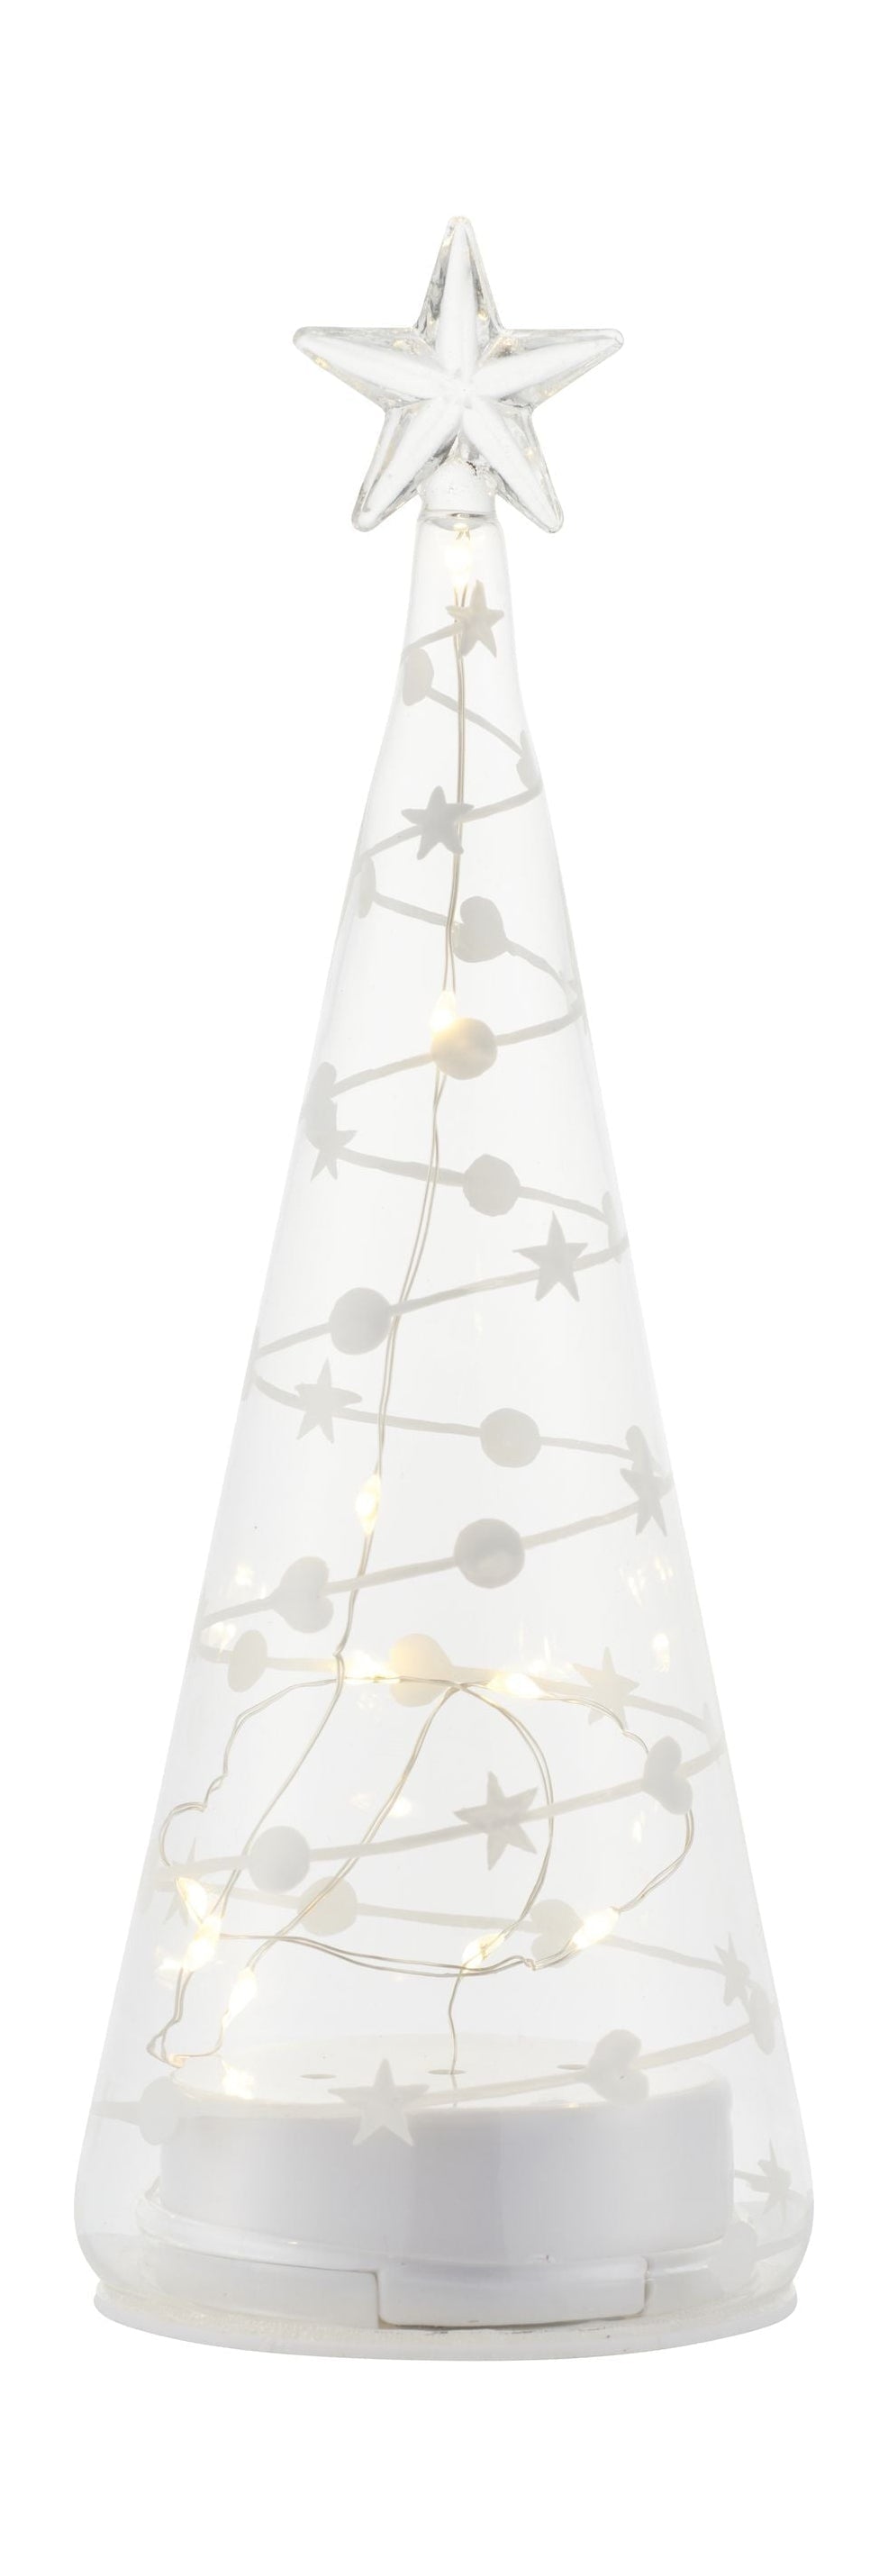 Sirius dulce árbol de Navidad, H22 cm, blanco/claro